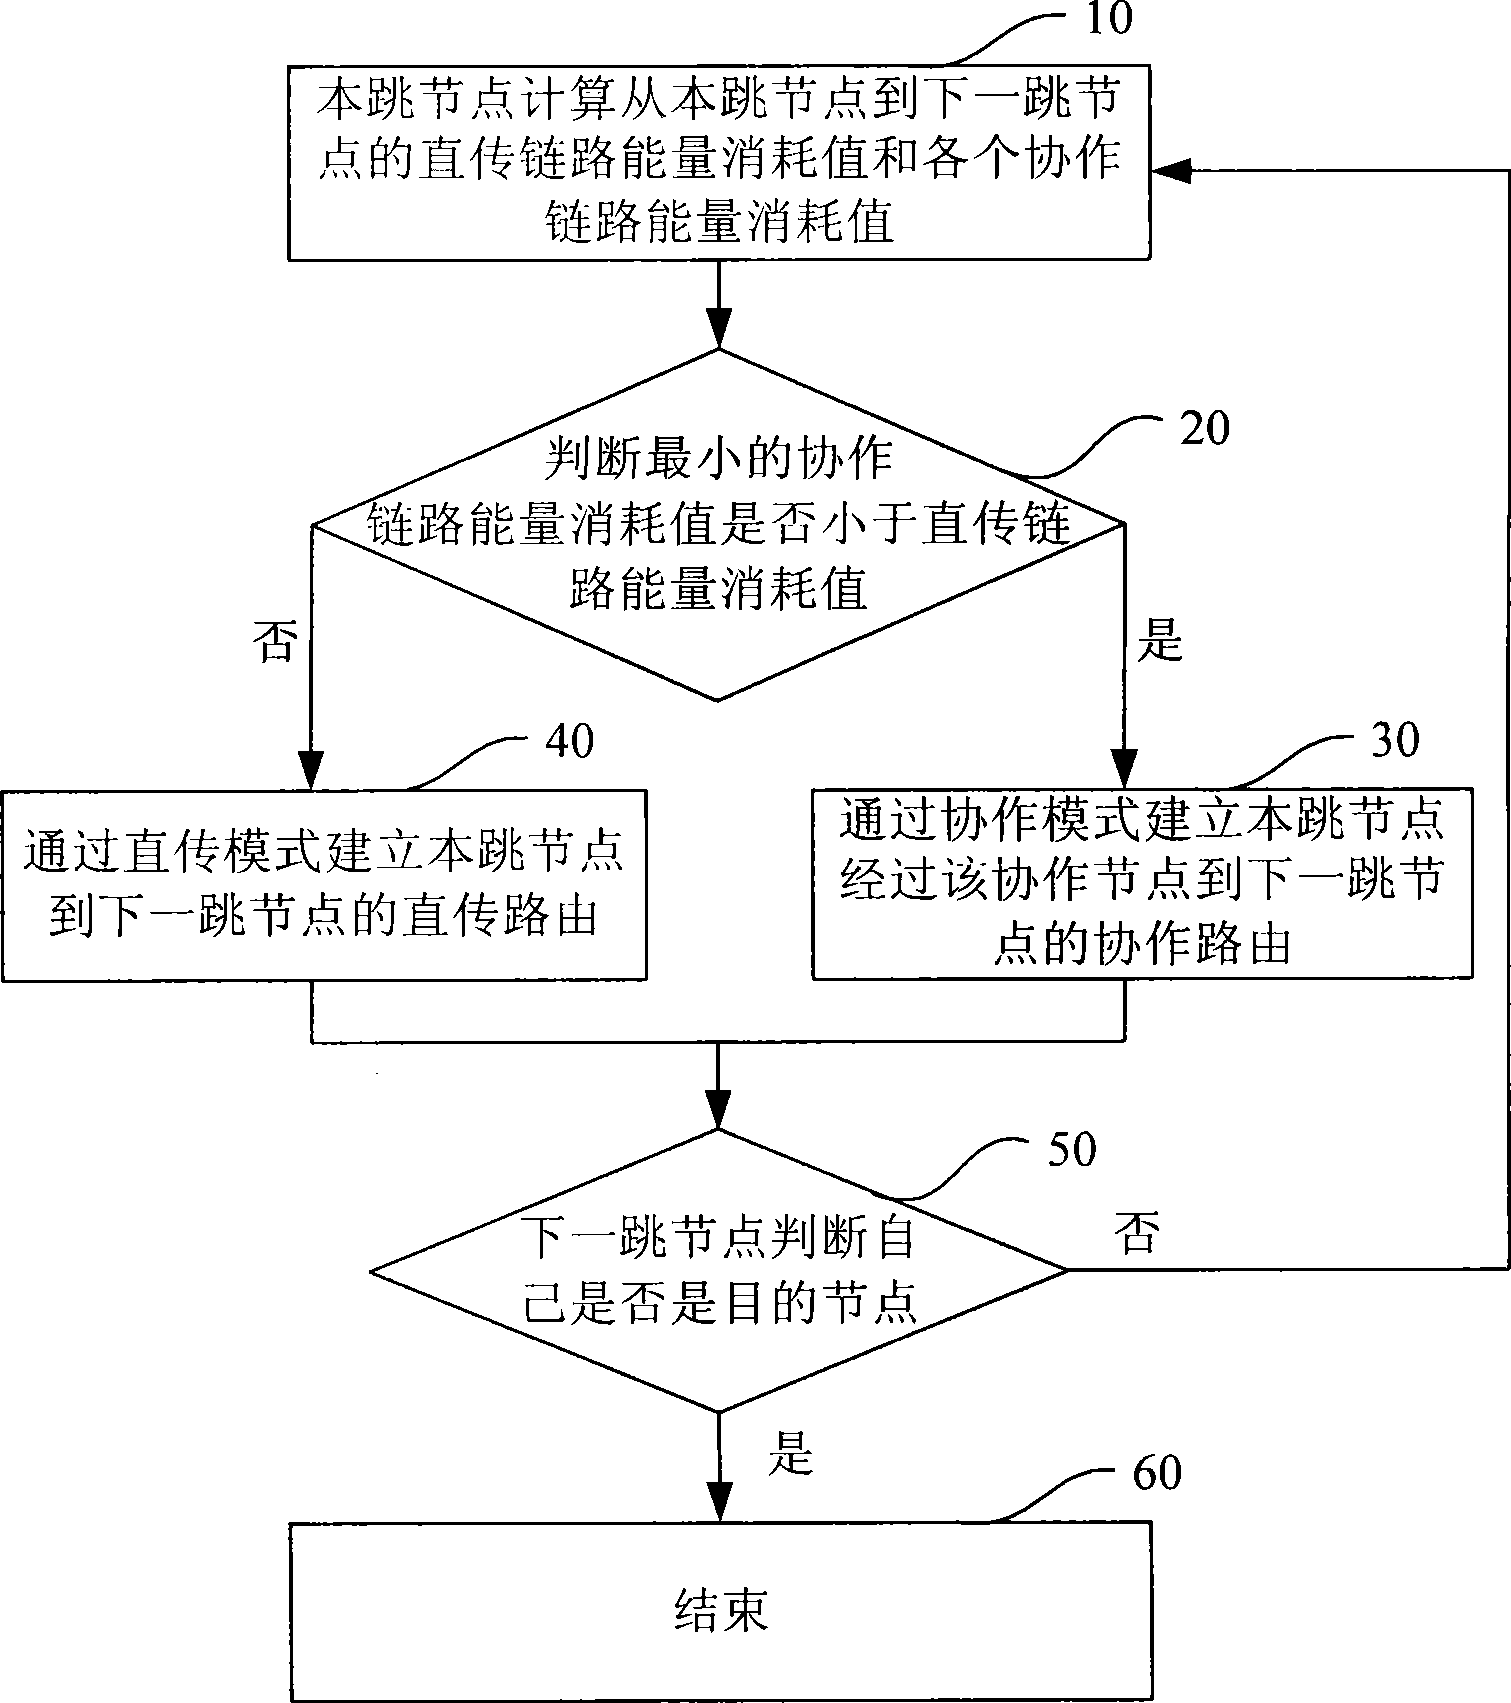 Cooperative routing method